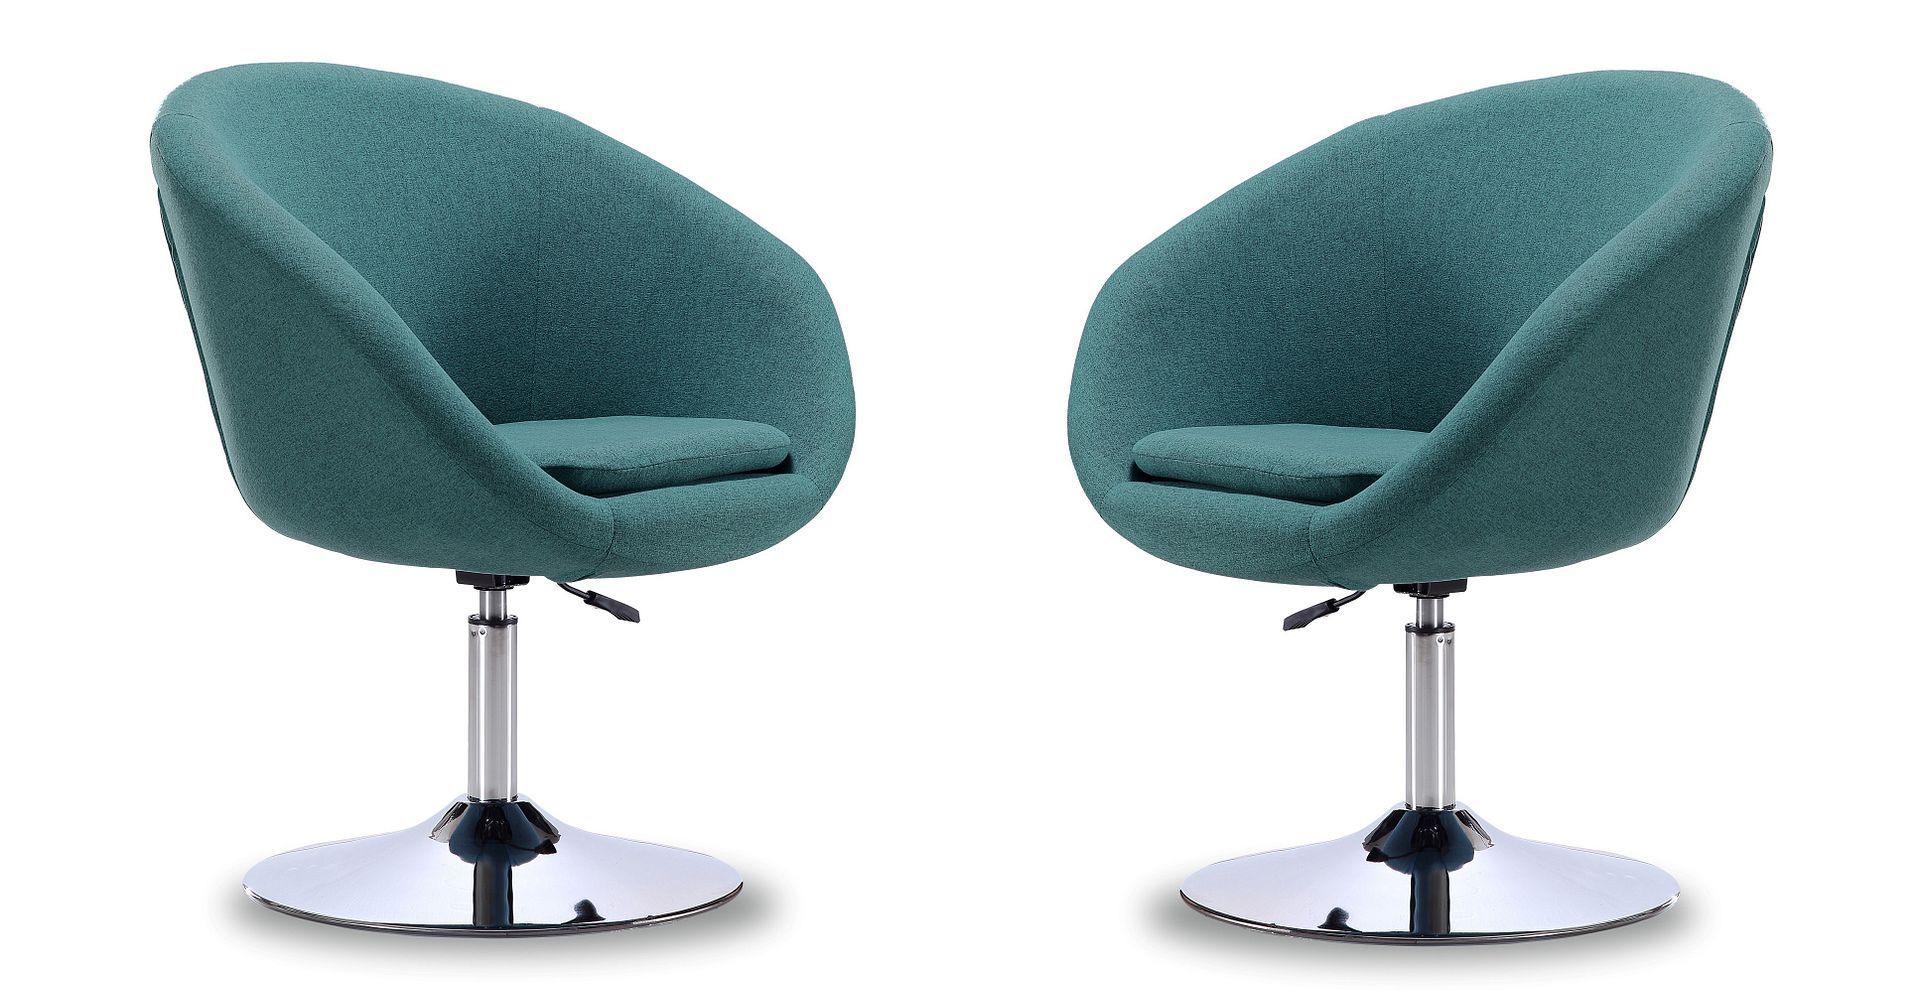 Hopper Swivel Adjustable Height Chair - Set of 2 - East Shore Modern Home Furnishings